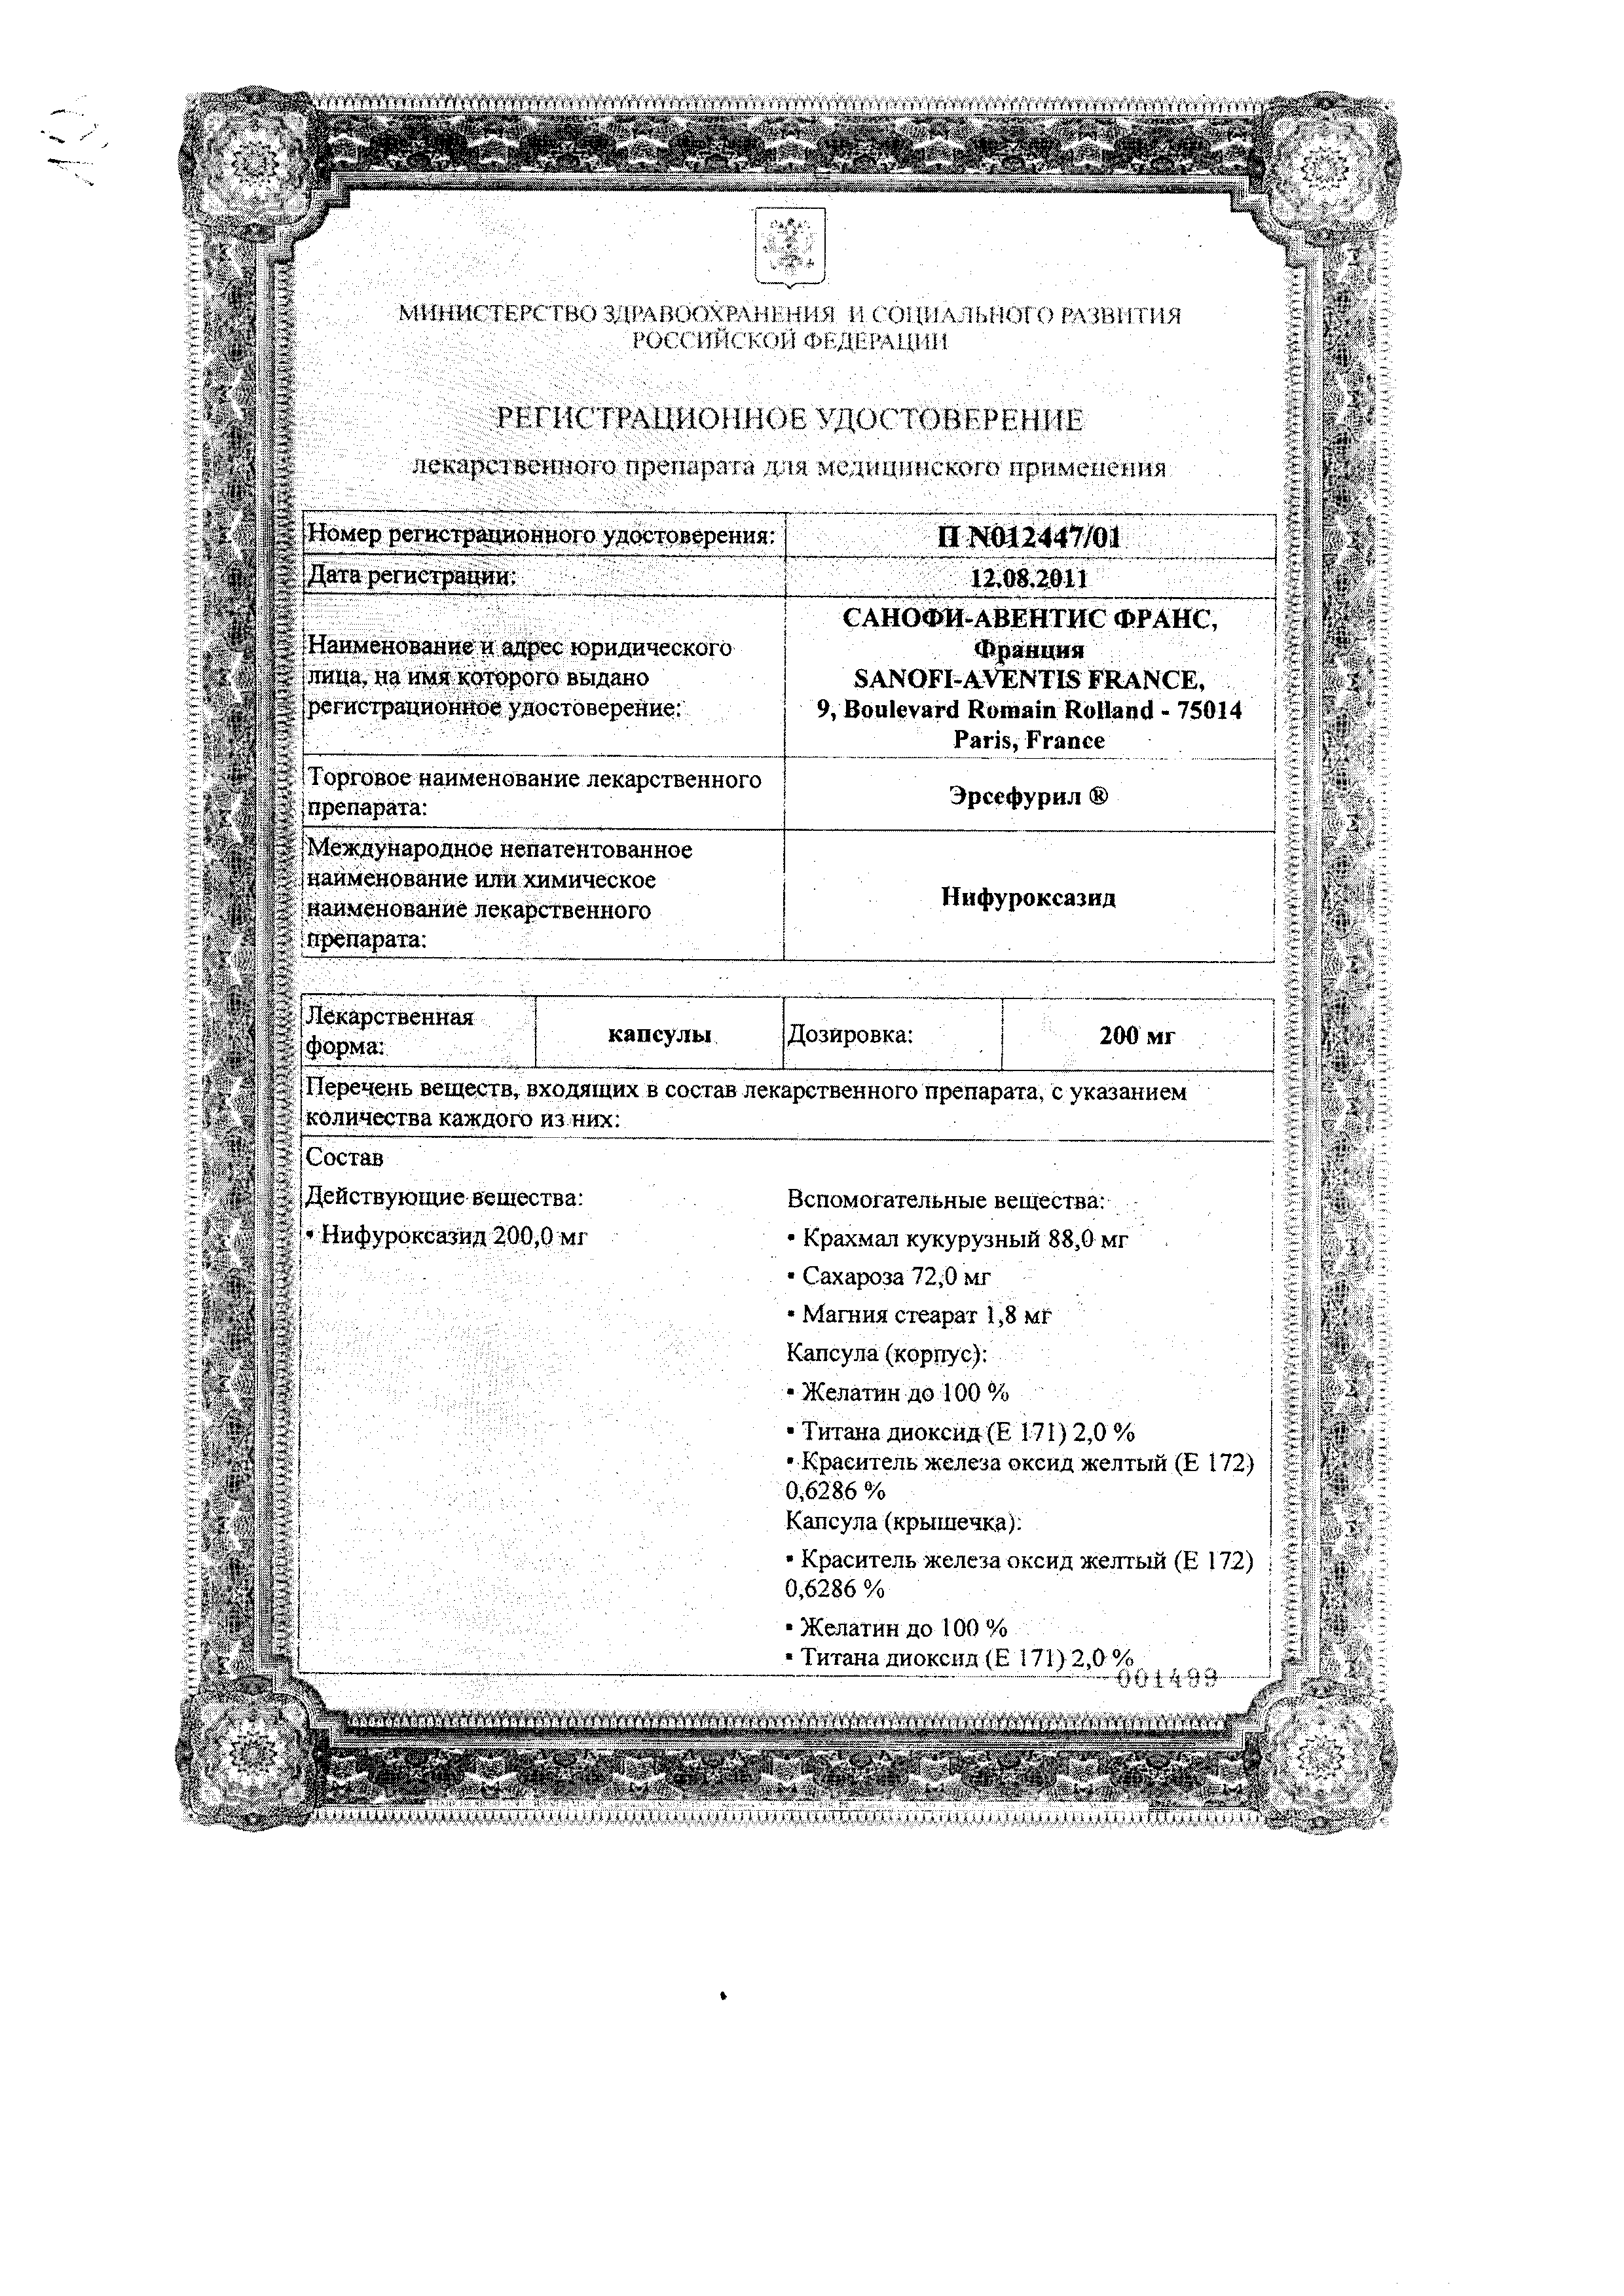 Эрсефурил сертификат